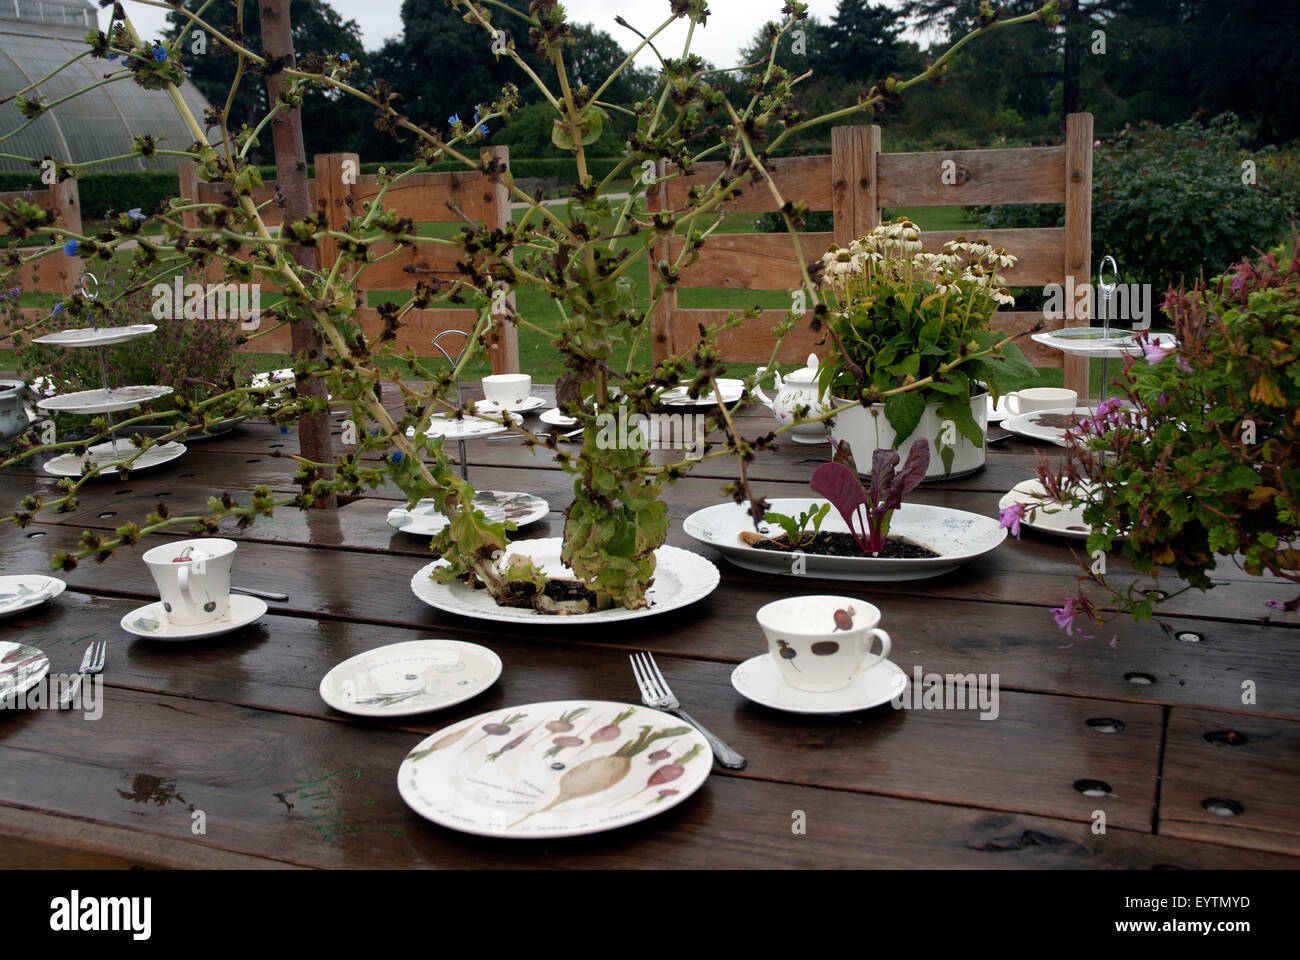 Garden display - tea party of herbs West London garden, England UK Stock Photo